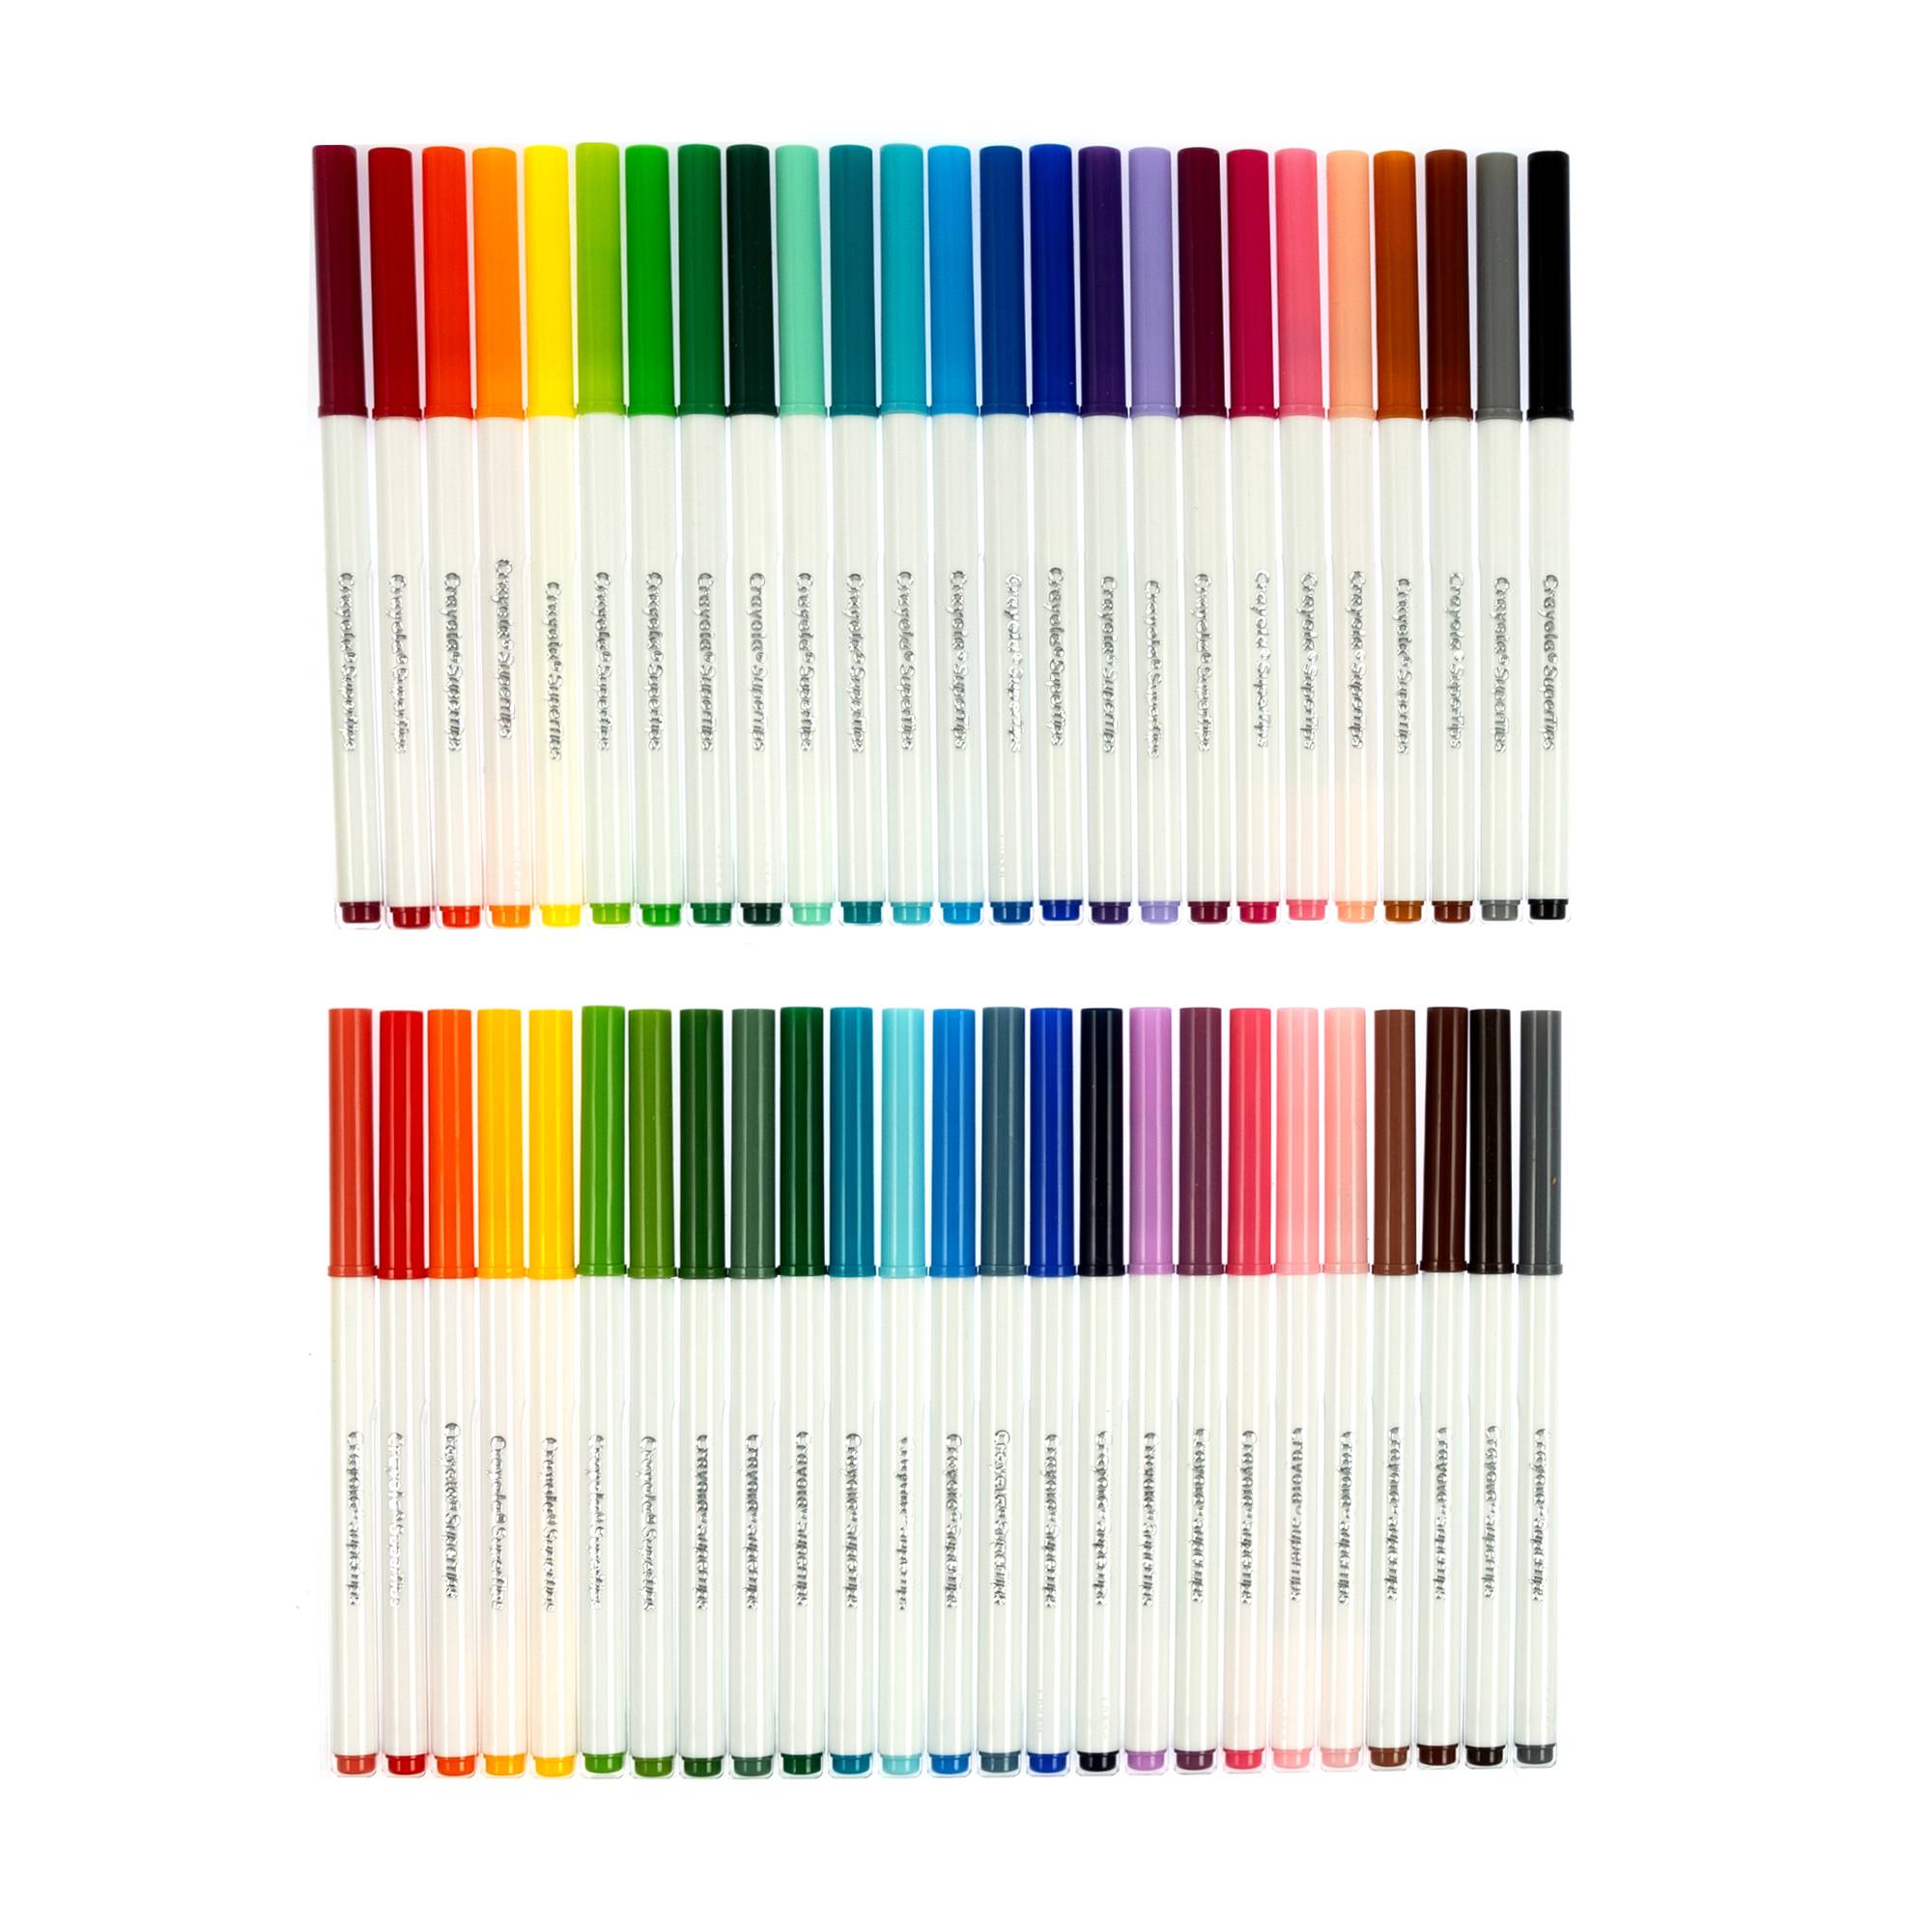 Crayola Supertips Washable Markers 50 Pack